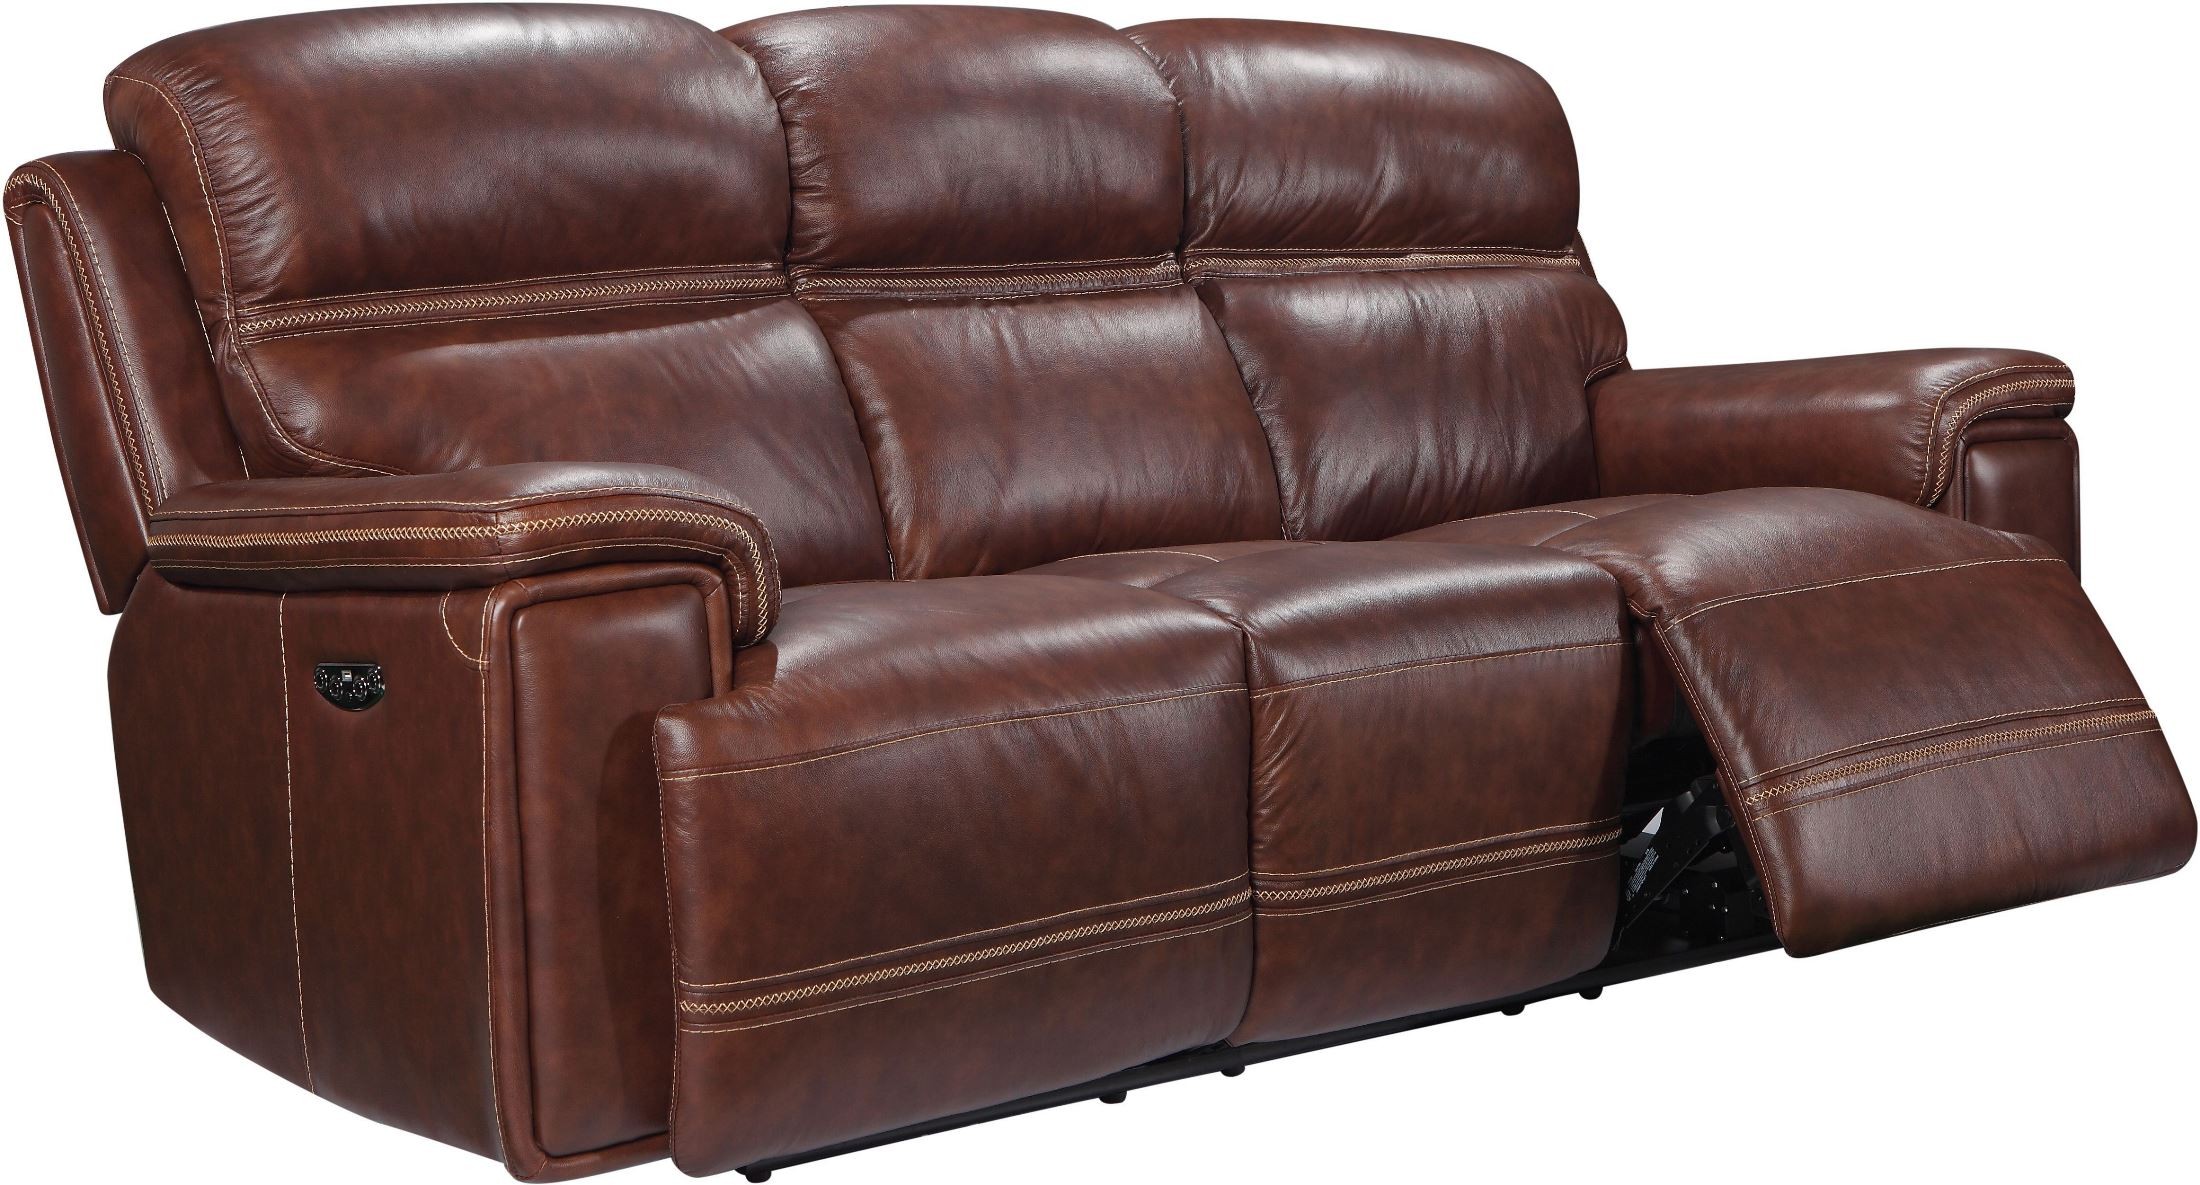 soft leather reclining sofa